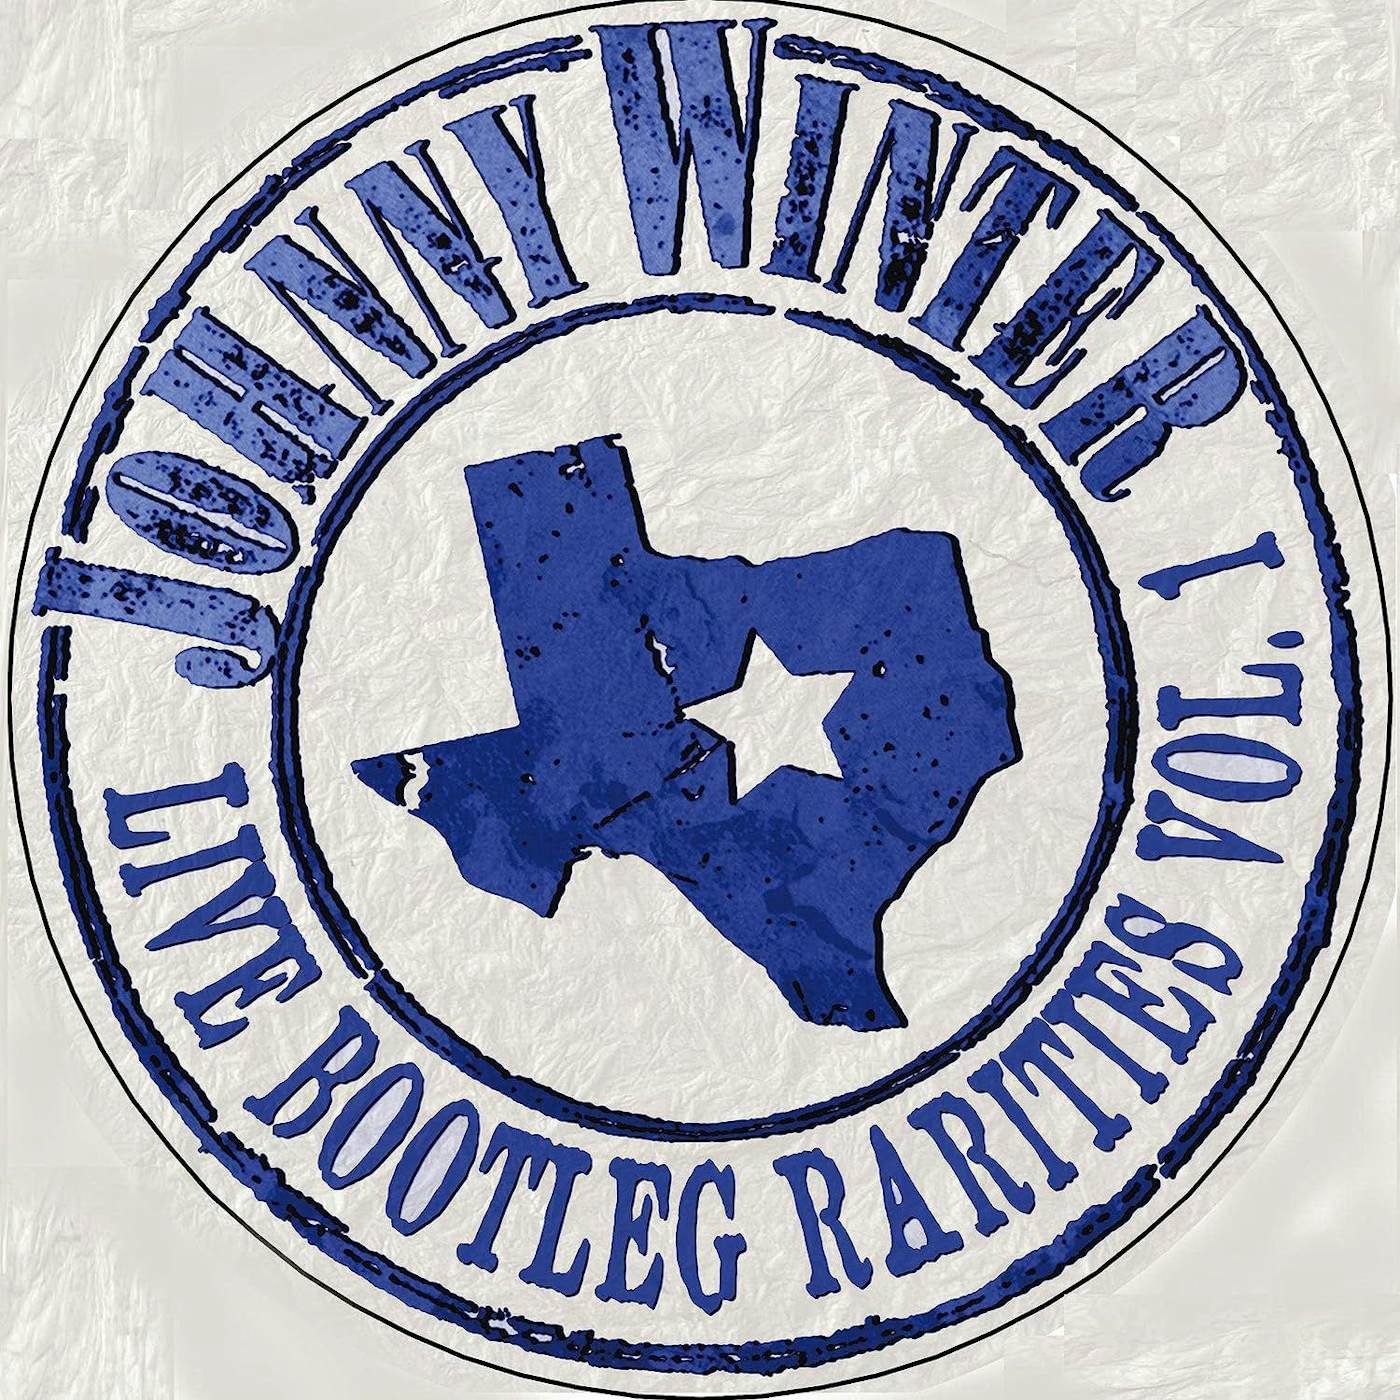 Johnny Winter Live Bootleg Rarities Volume One (White) Vinyl Record